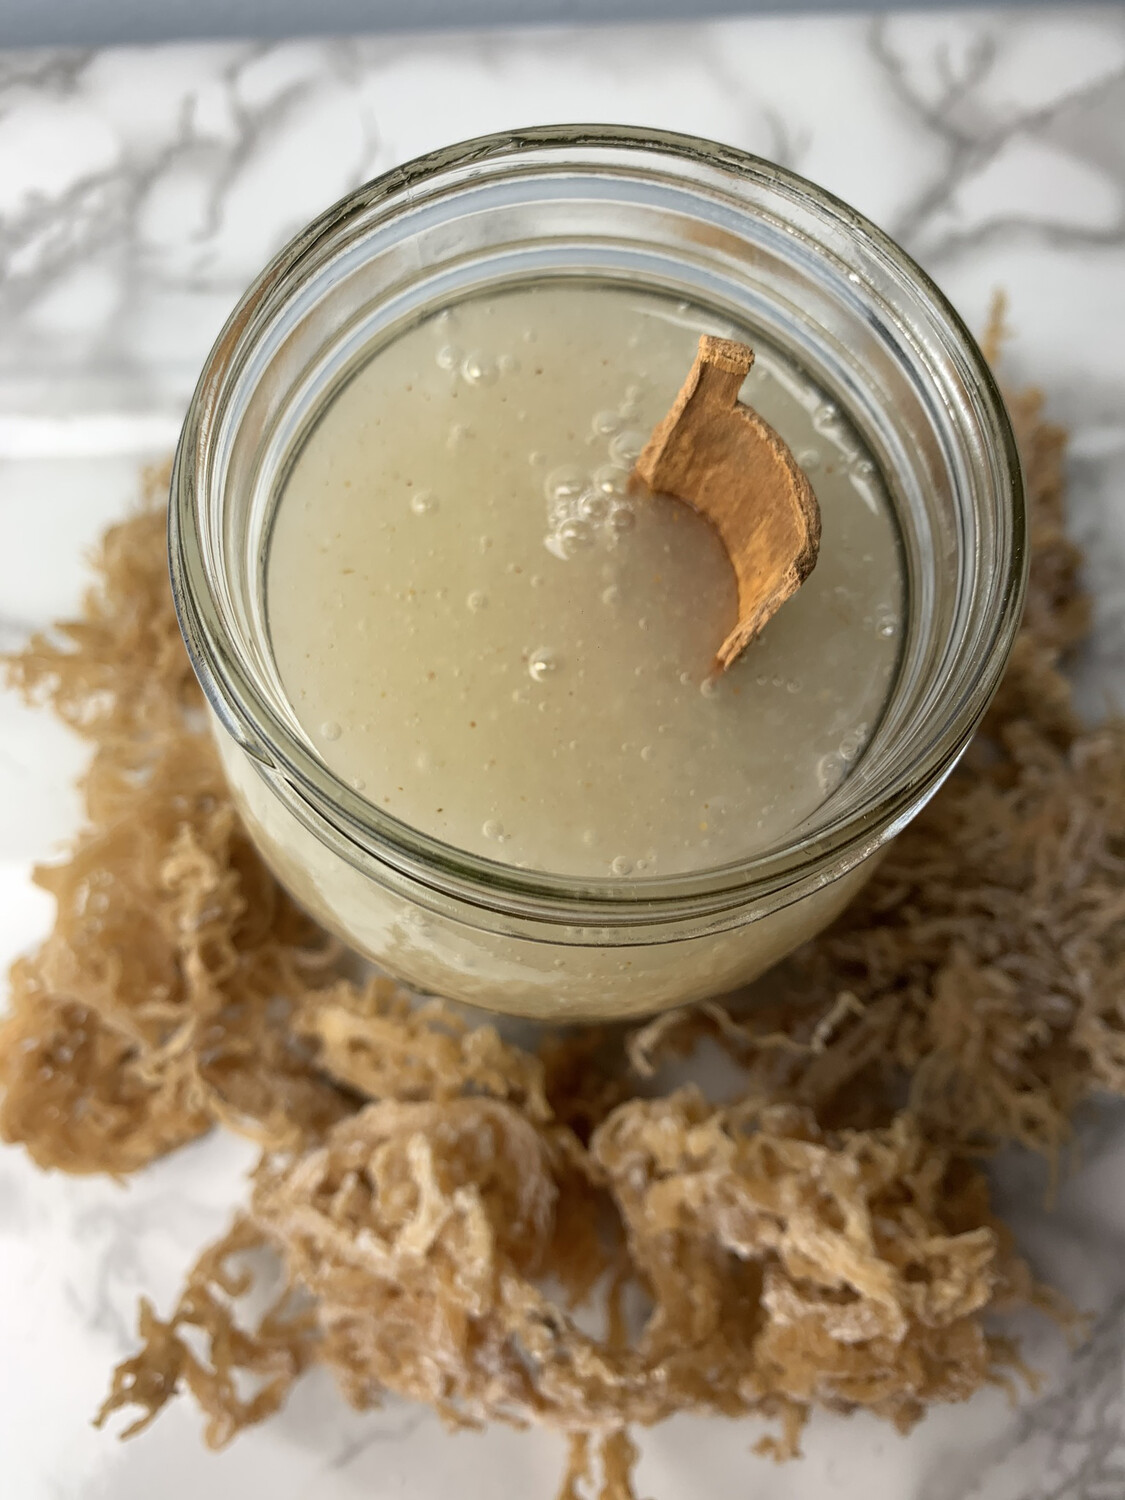 16 Oz Organic WILDCRAFTED Sea Moss Gel Infused With Cinnamon & Nutmeg